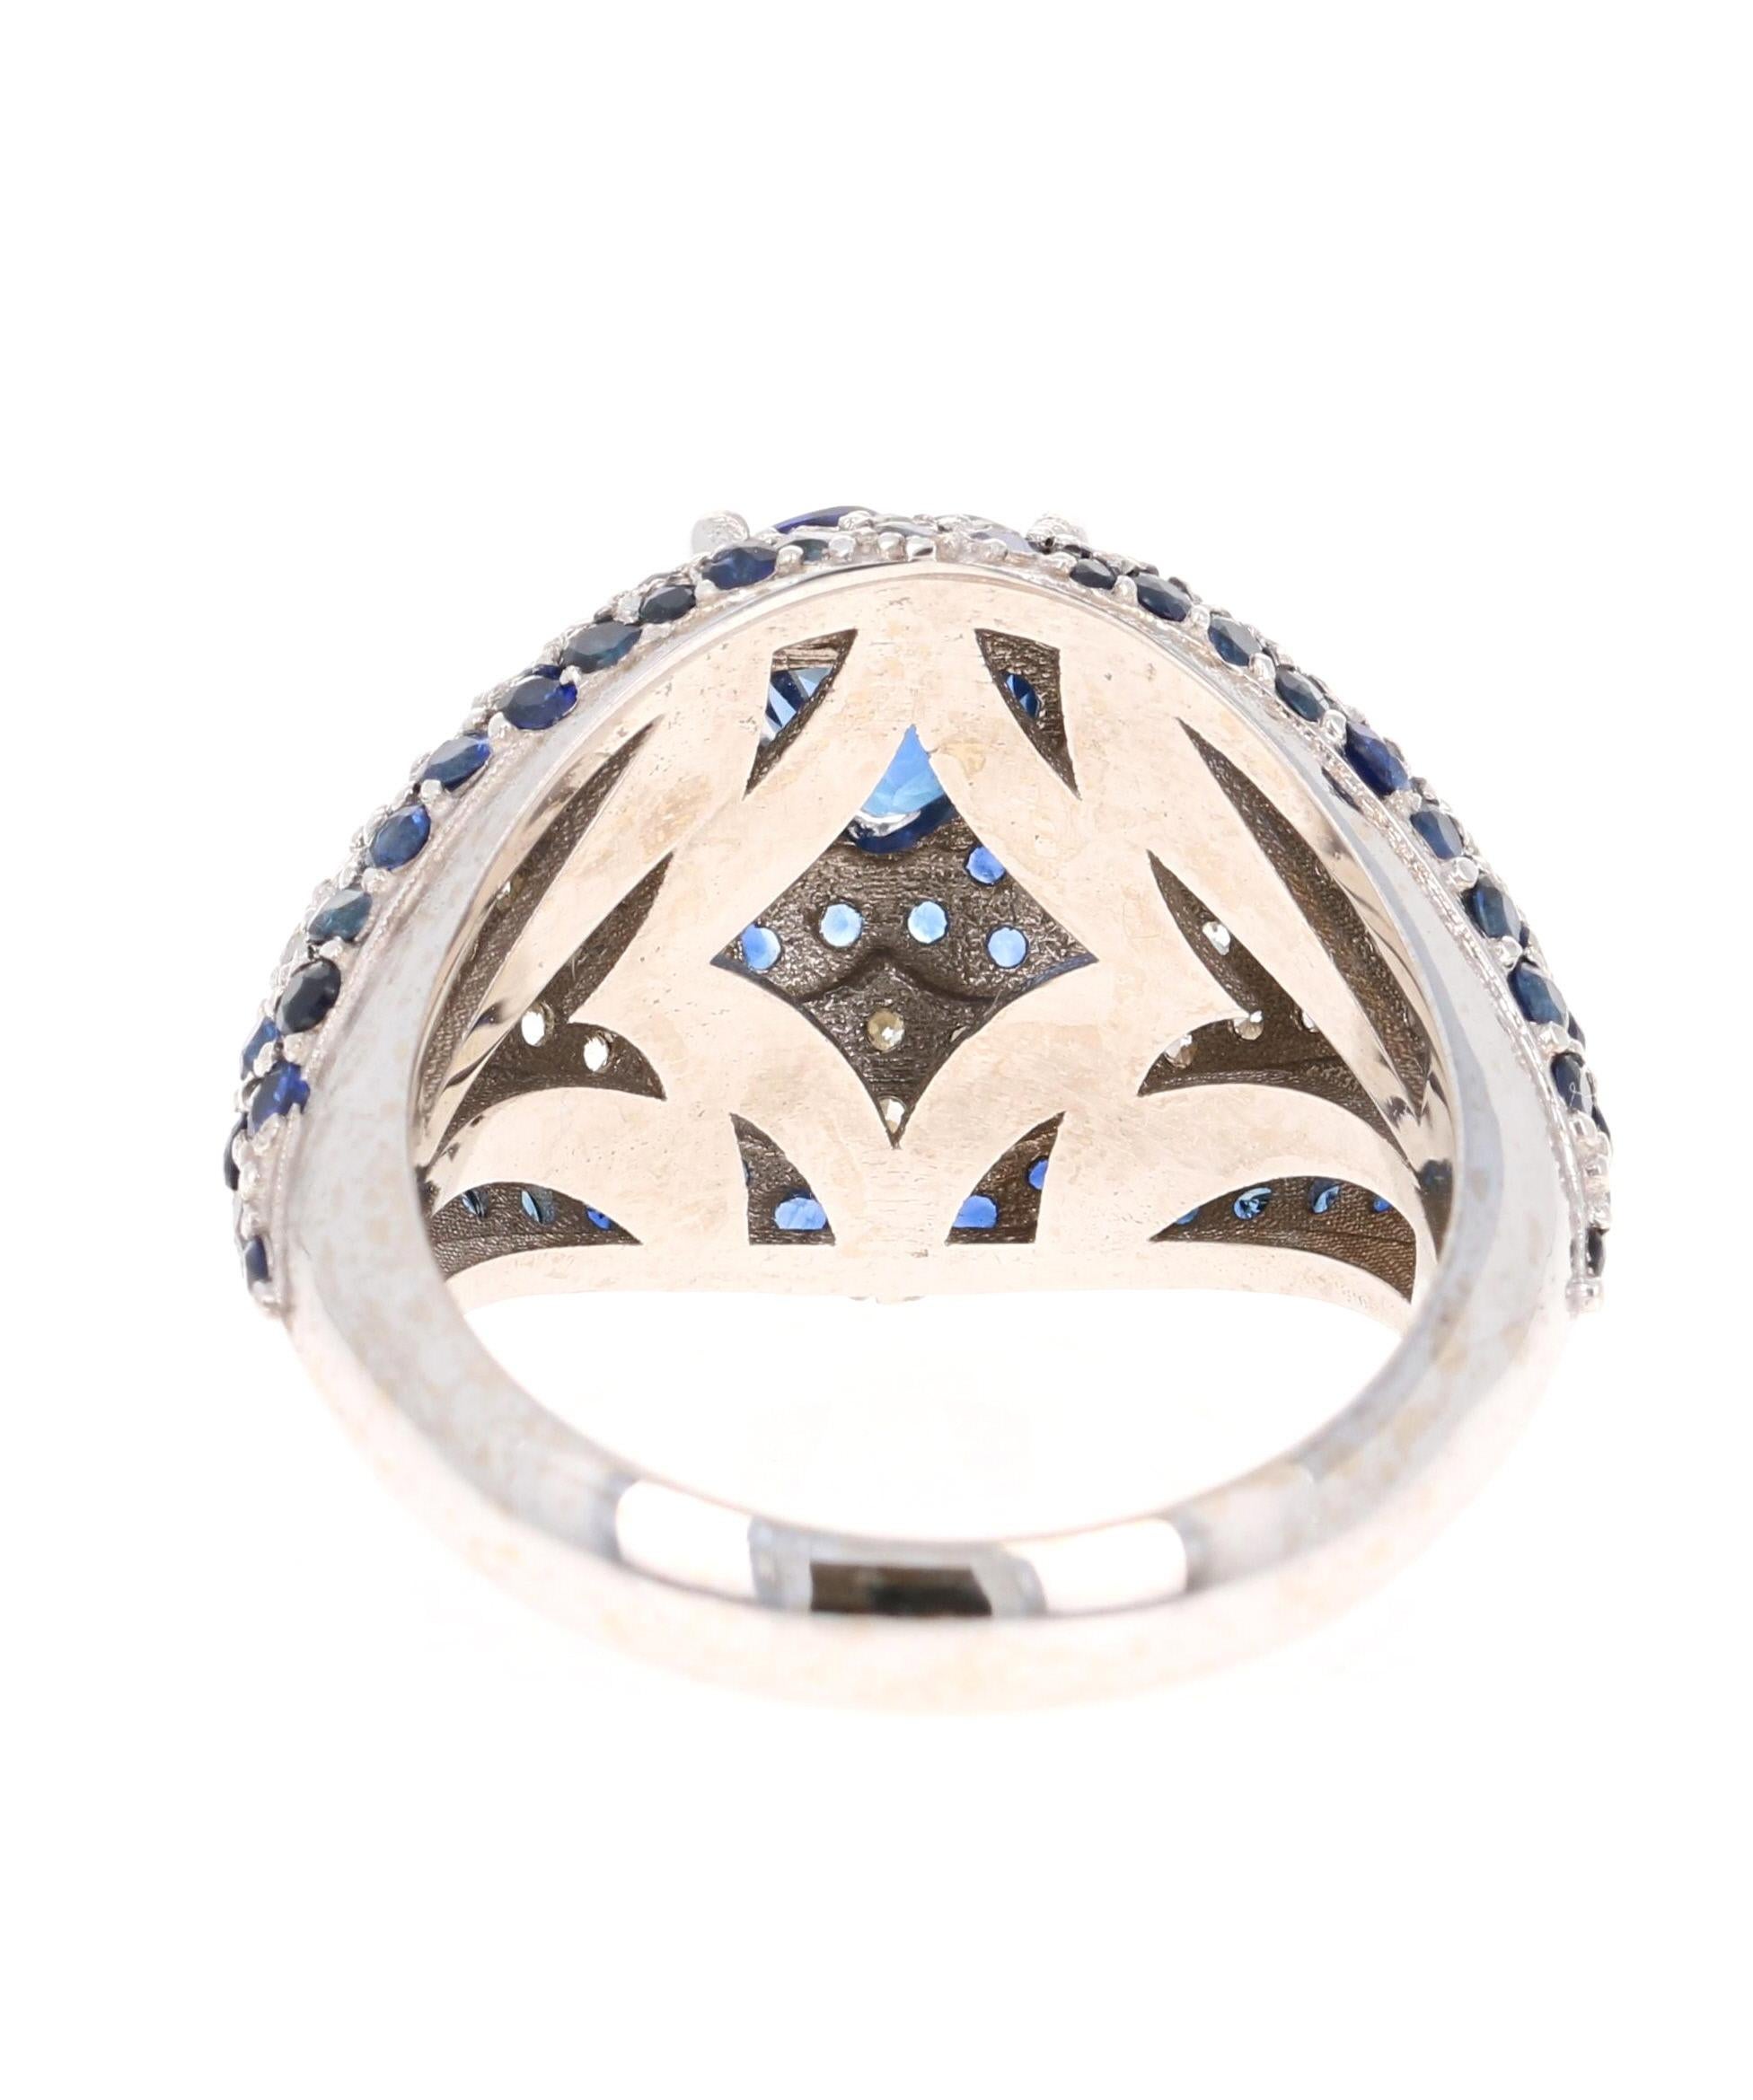 Round Cut 4.17 Carat Blue Sapphire Diamond 18 Karat White Gold Cocktail Ring For Sale